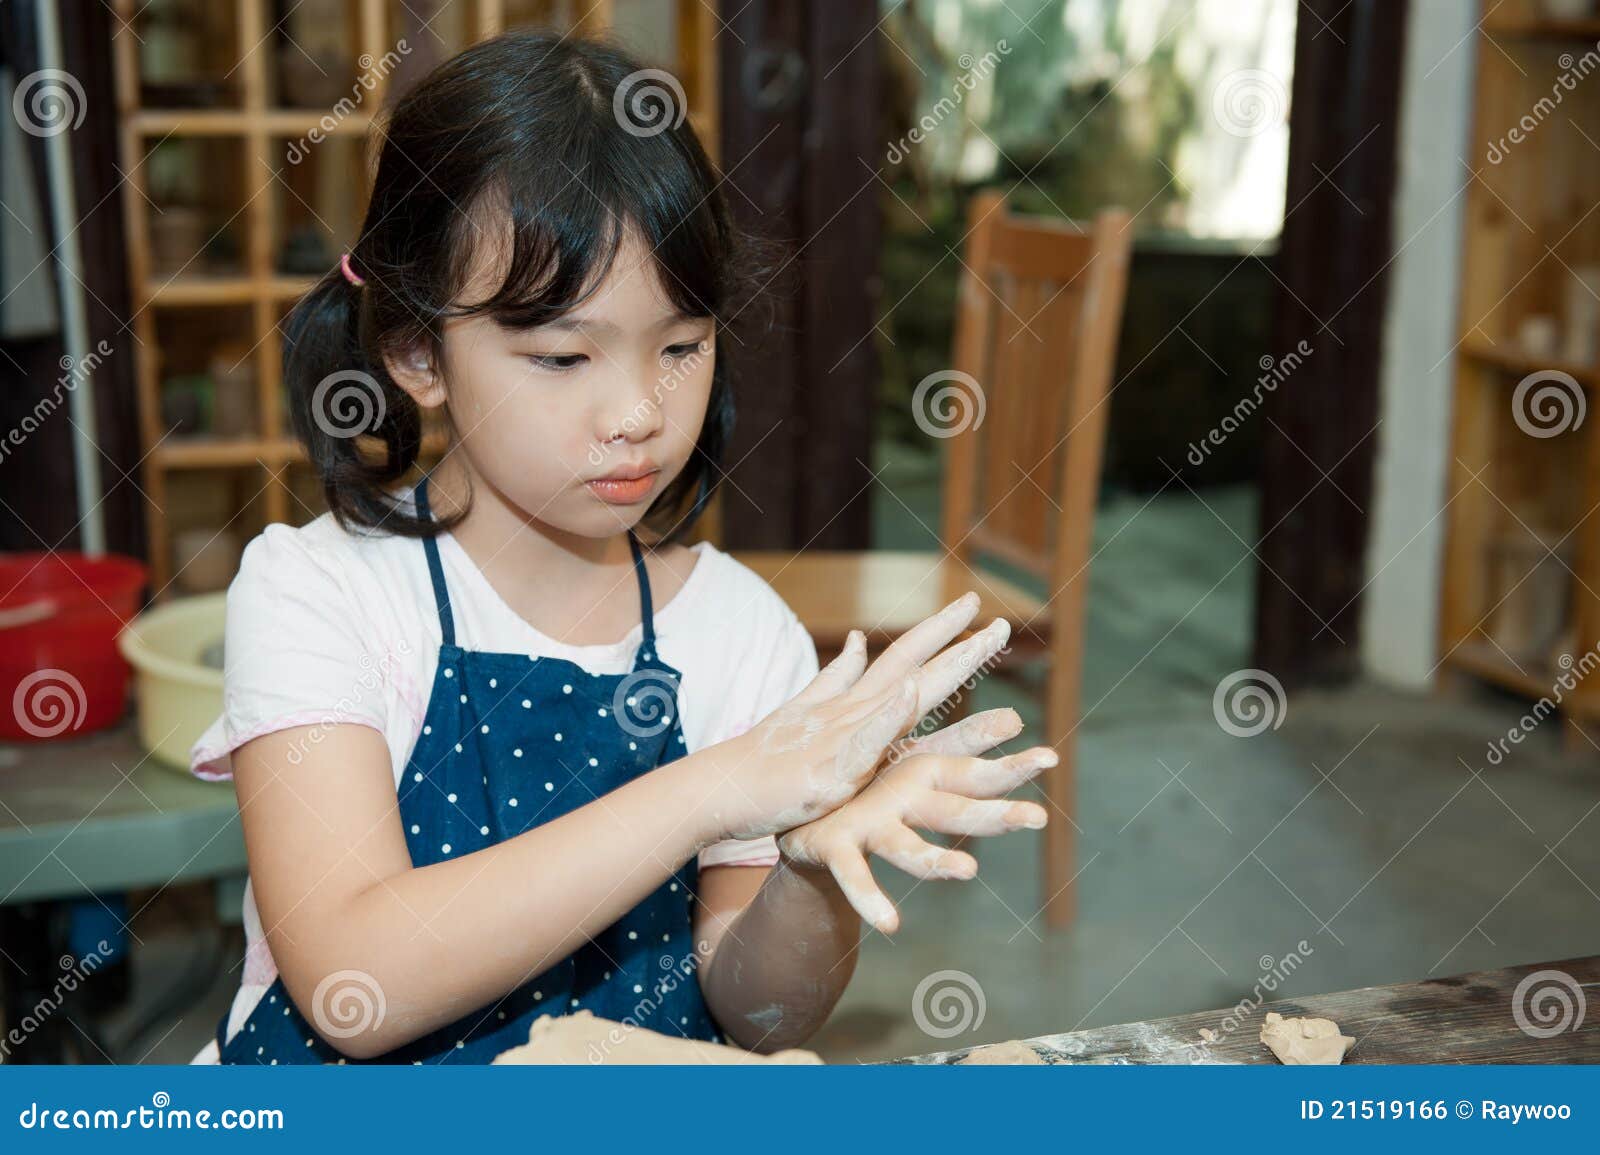 asian kid shaping pottery